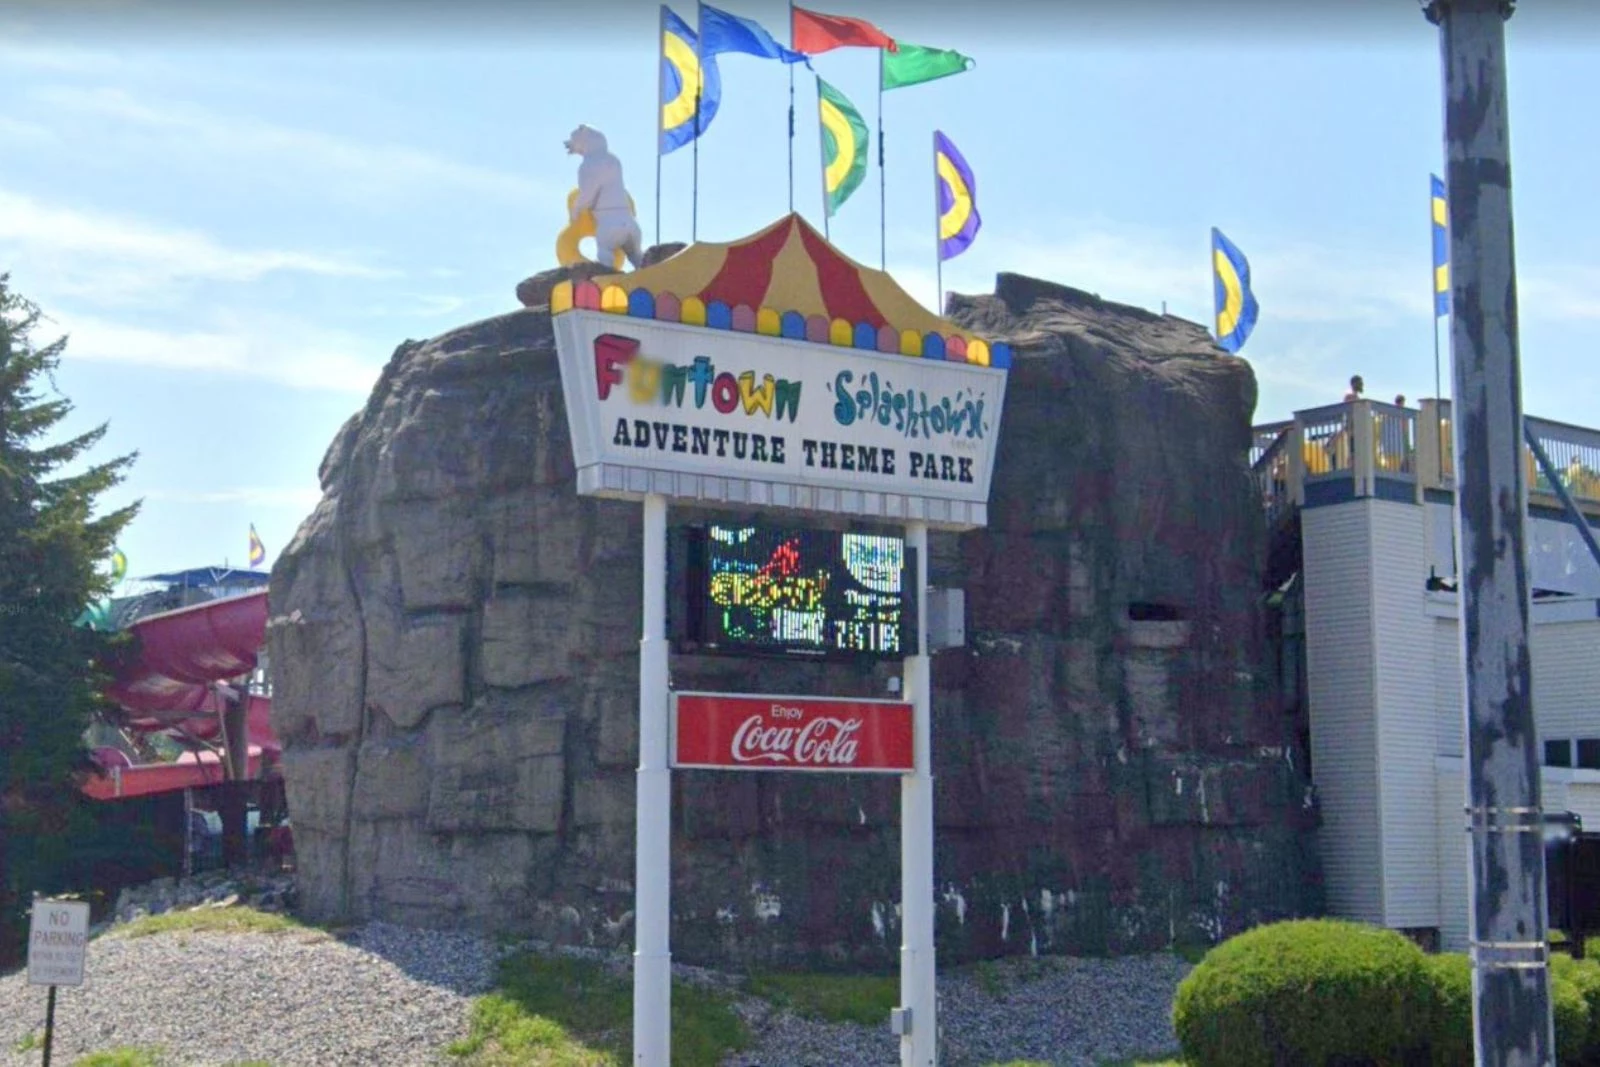 Visit Maine's Largest Amusement & Water Park at Funtown, Splashtown, USA